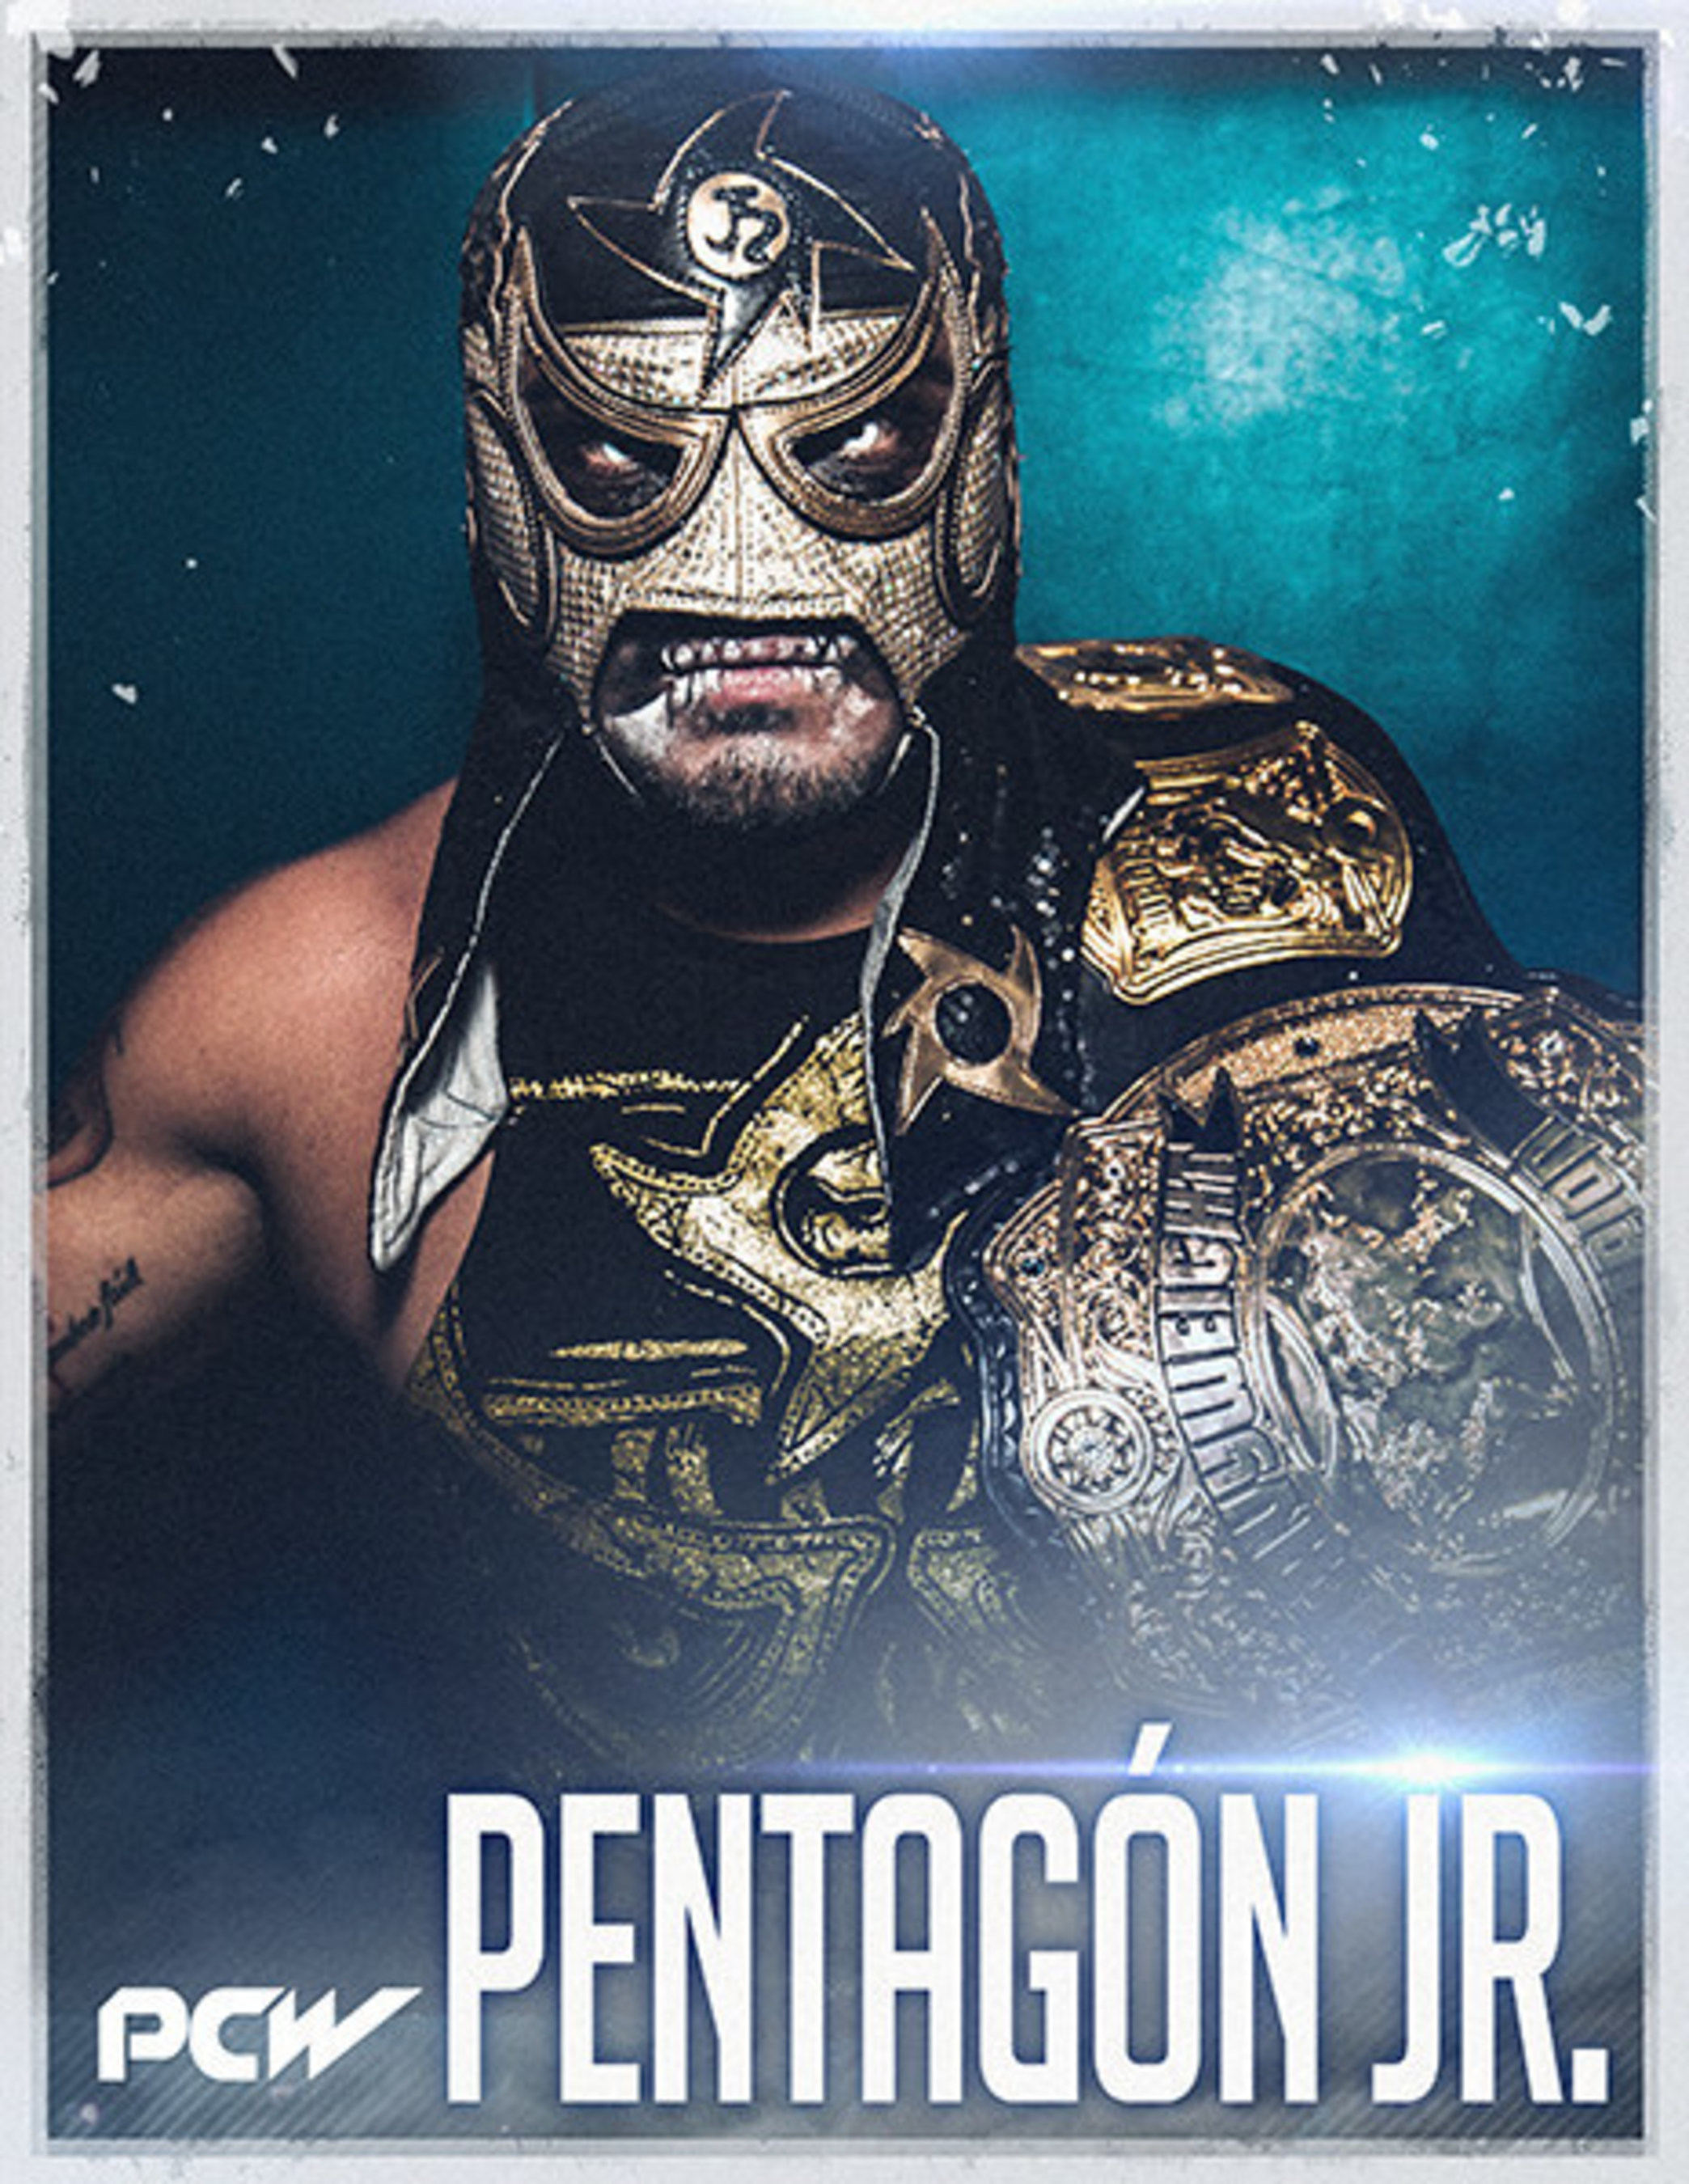 Pacific Coast Wrestling Heavyweight Champion, Pentagon, Jr. will defend his title against wrestling legend "RVD" Rob Van Dam, November 12, 2016 in Torrance, CA